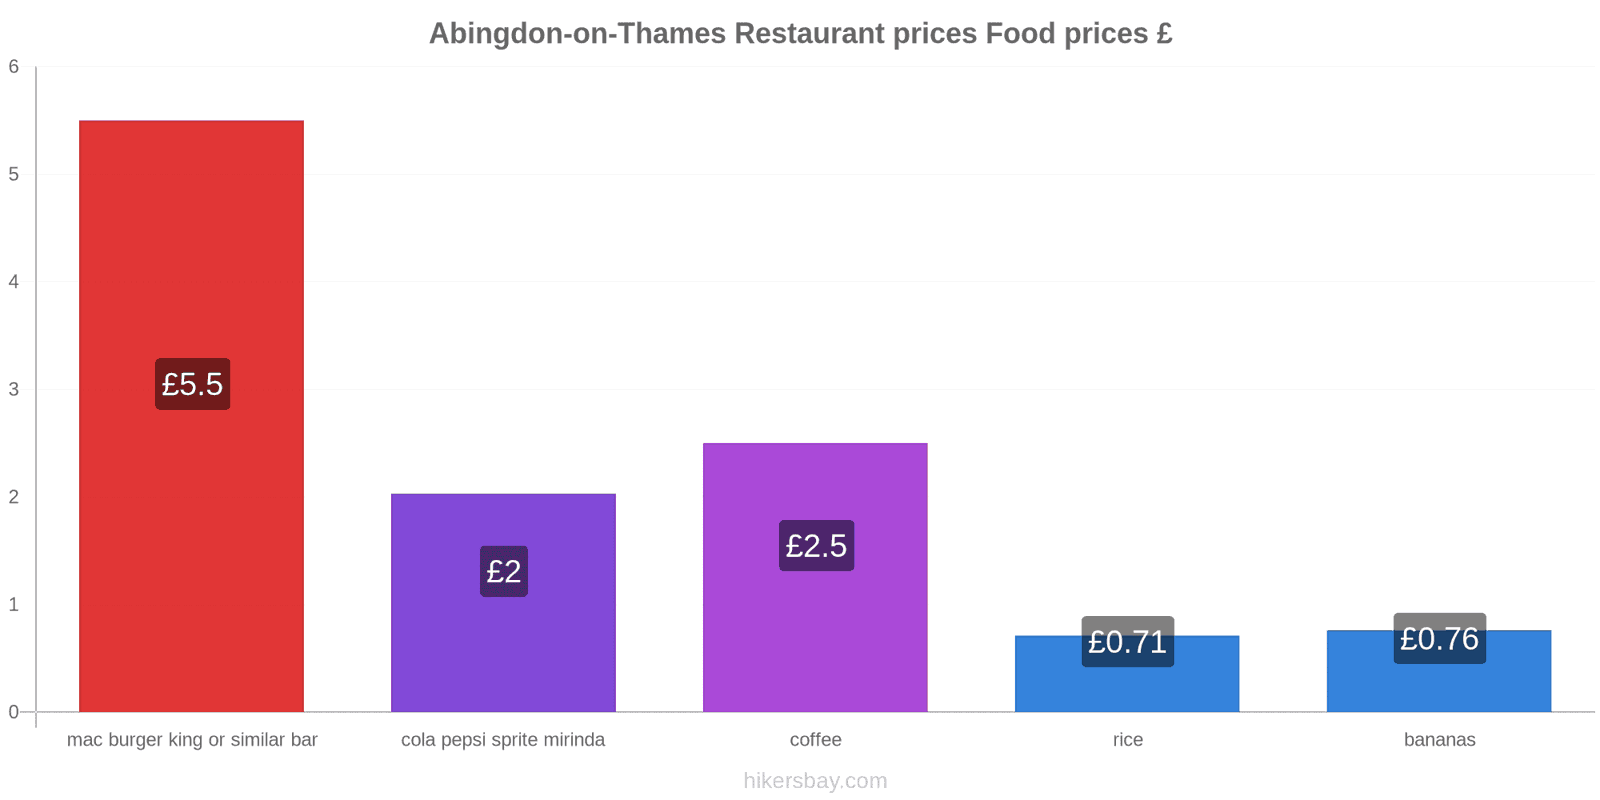 Abingdon-on-Thames price changes hikersbay.com